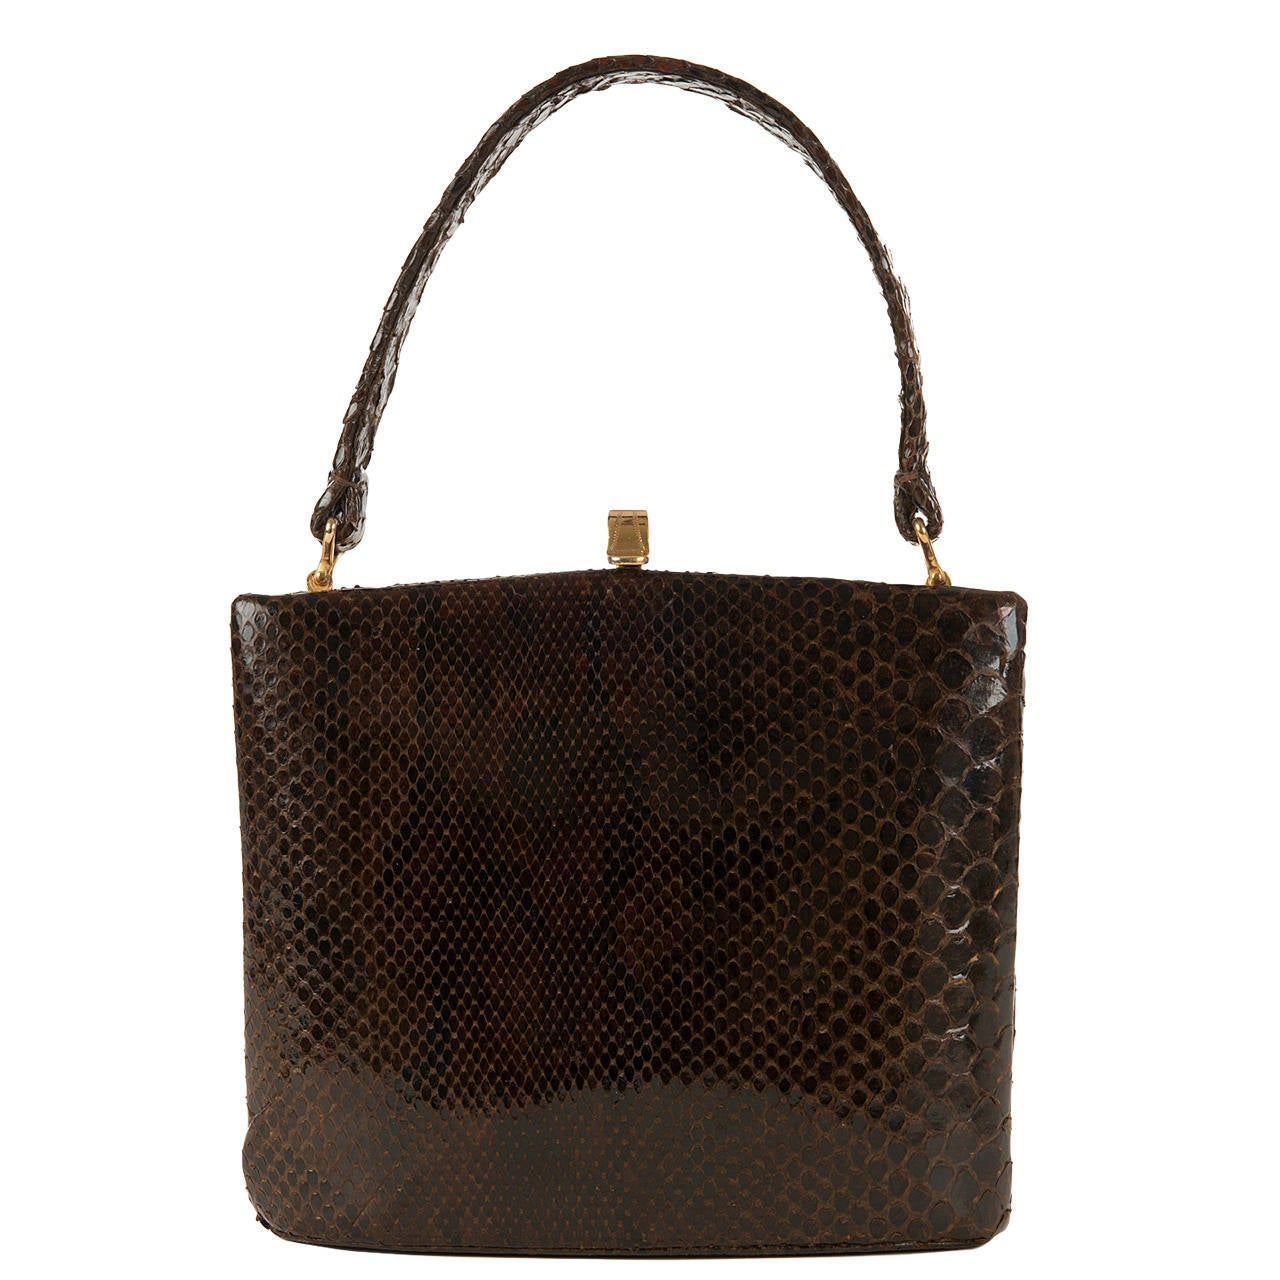 A Vintage Choc Brown Lizard Handbag For Sale